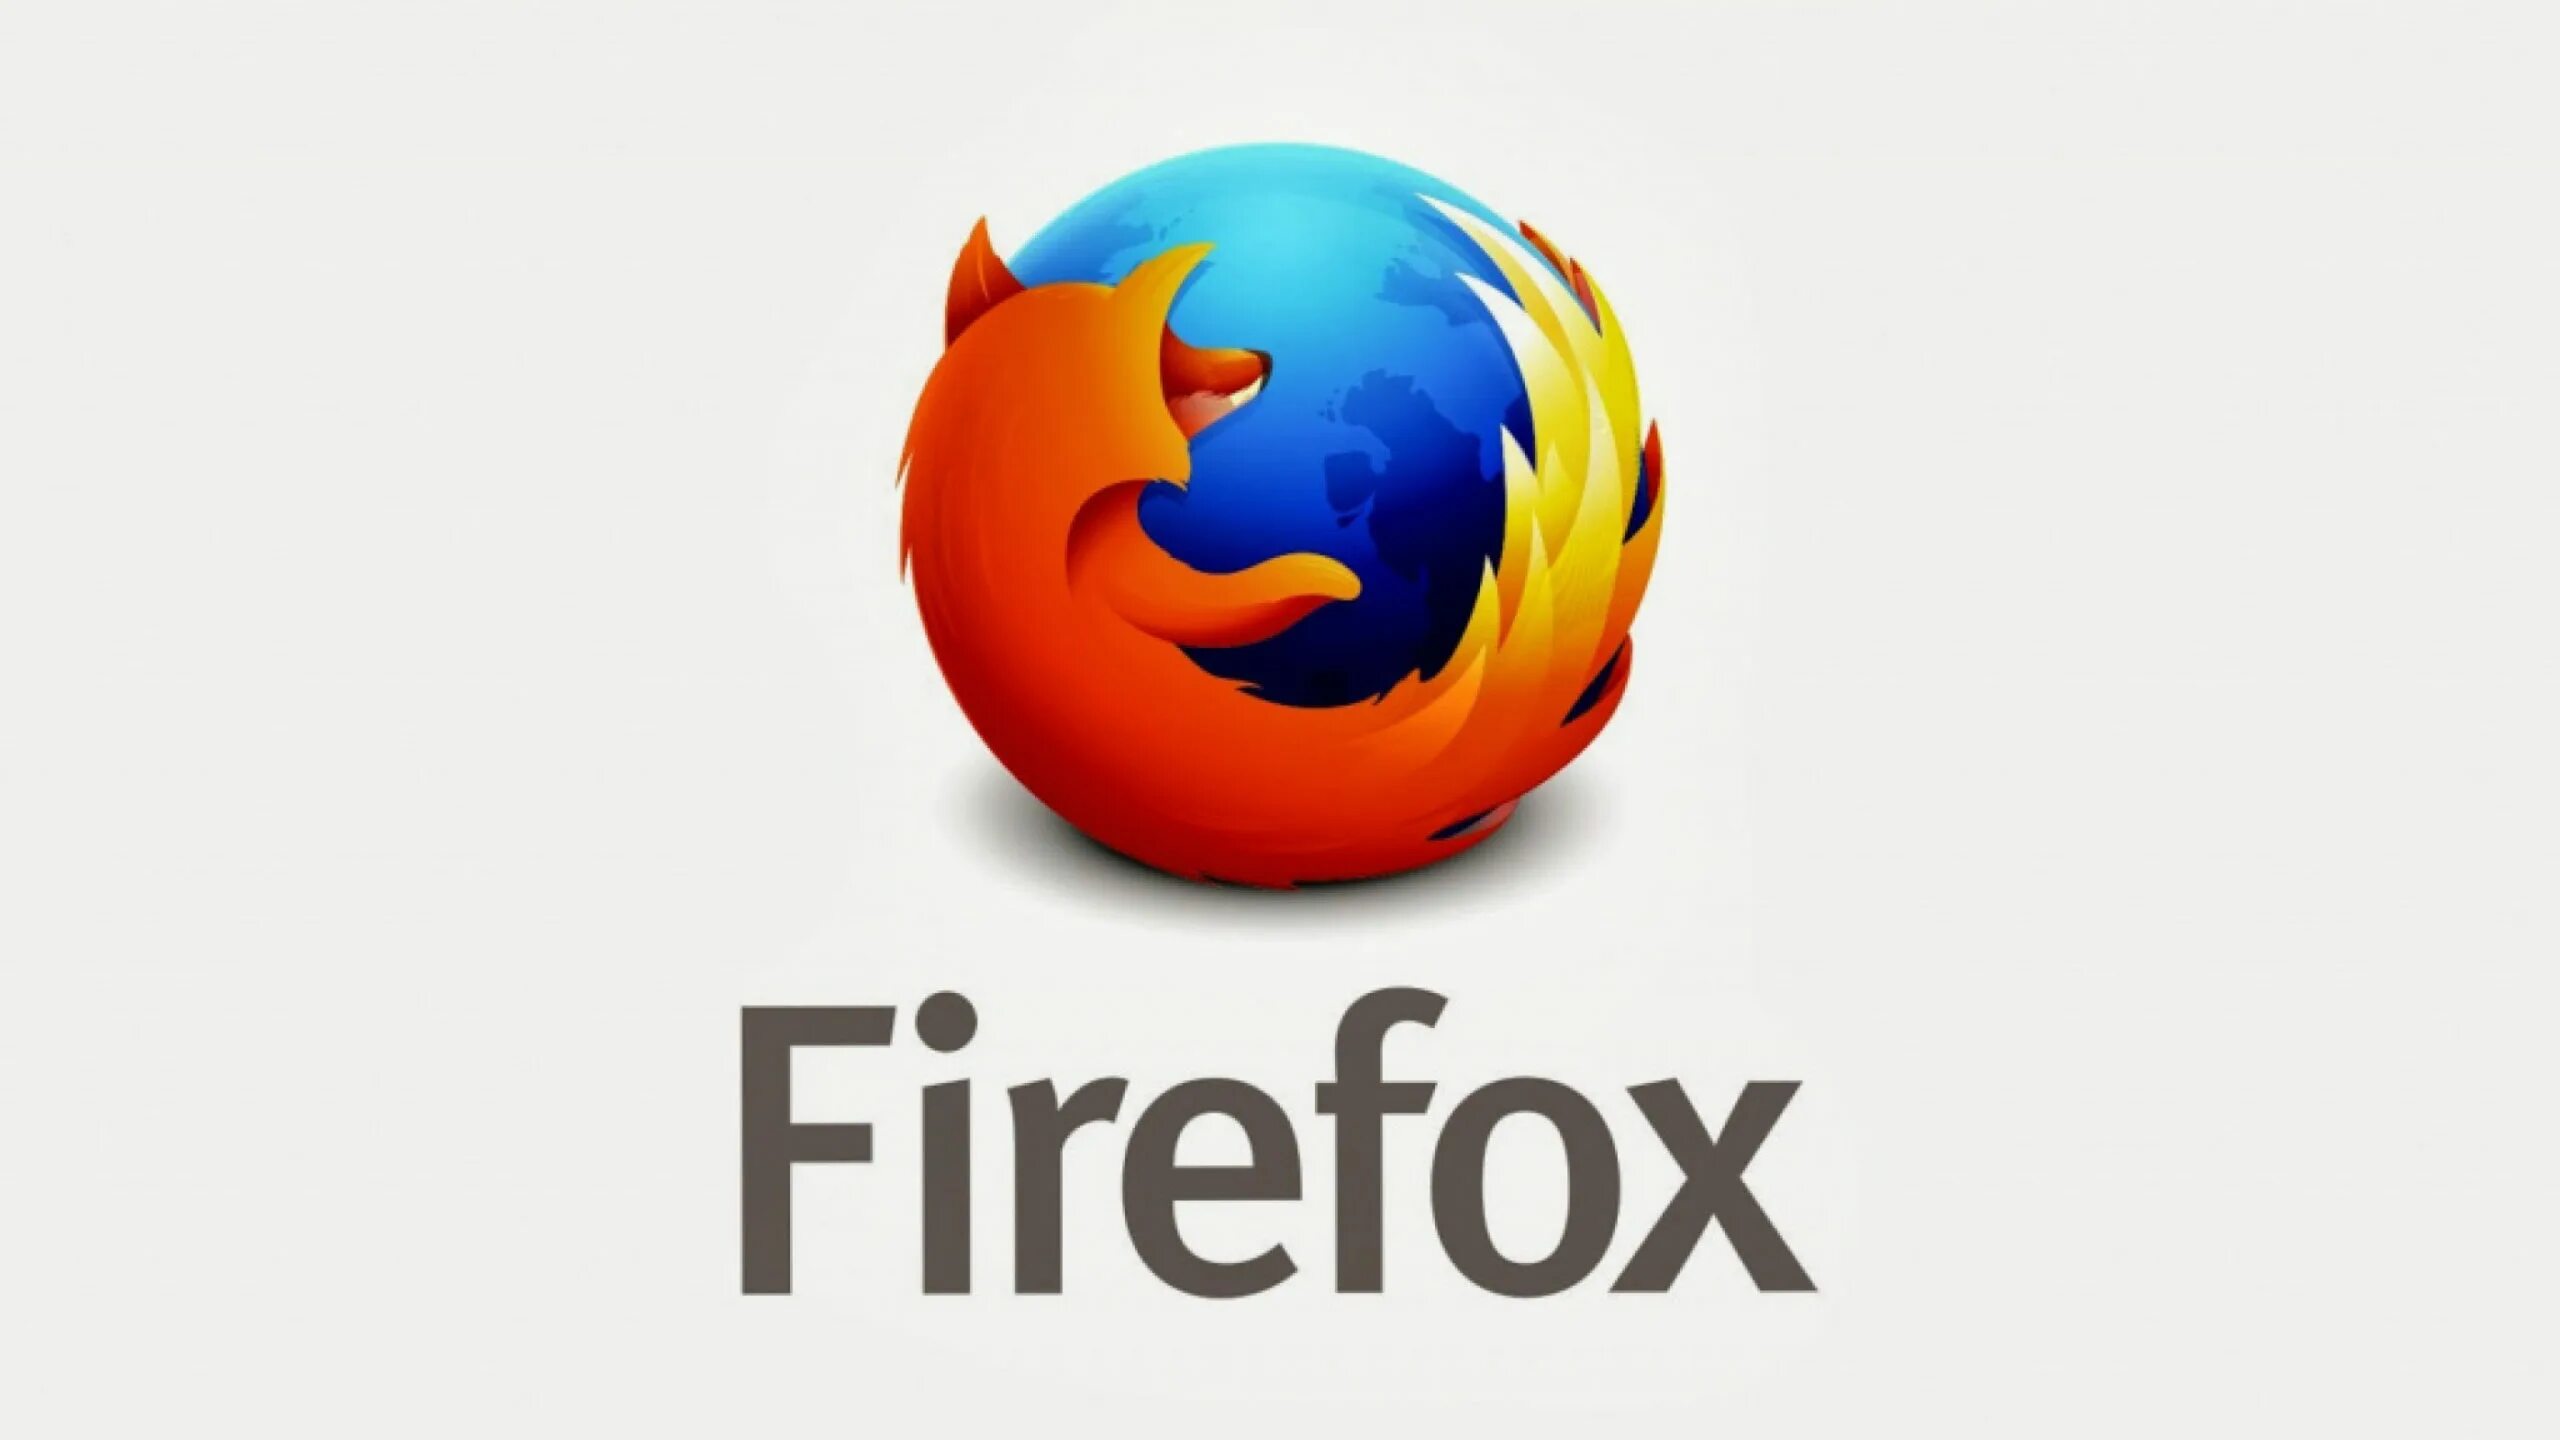 Версия браузера мазила. Эмблема Firefox. Mozilla Firefox logo. Логотип браузера мазила. Firefox браузер лого.